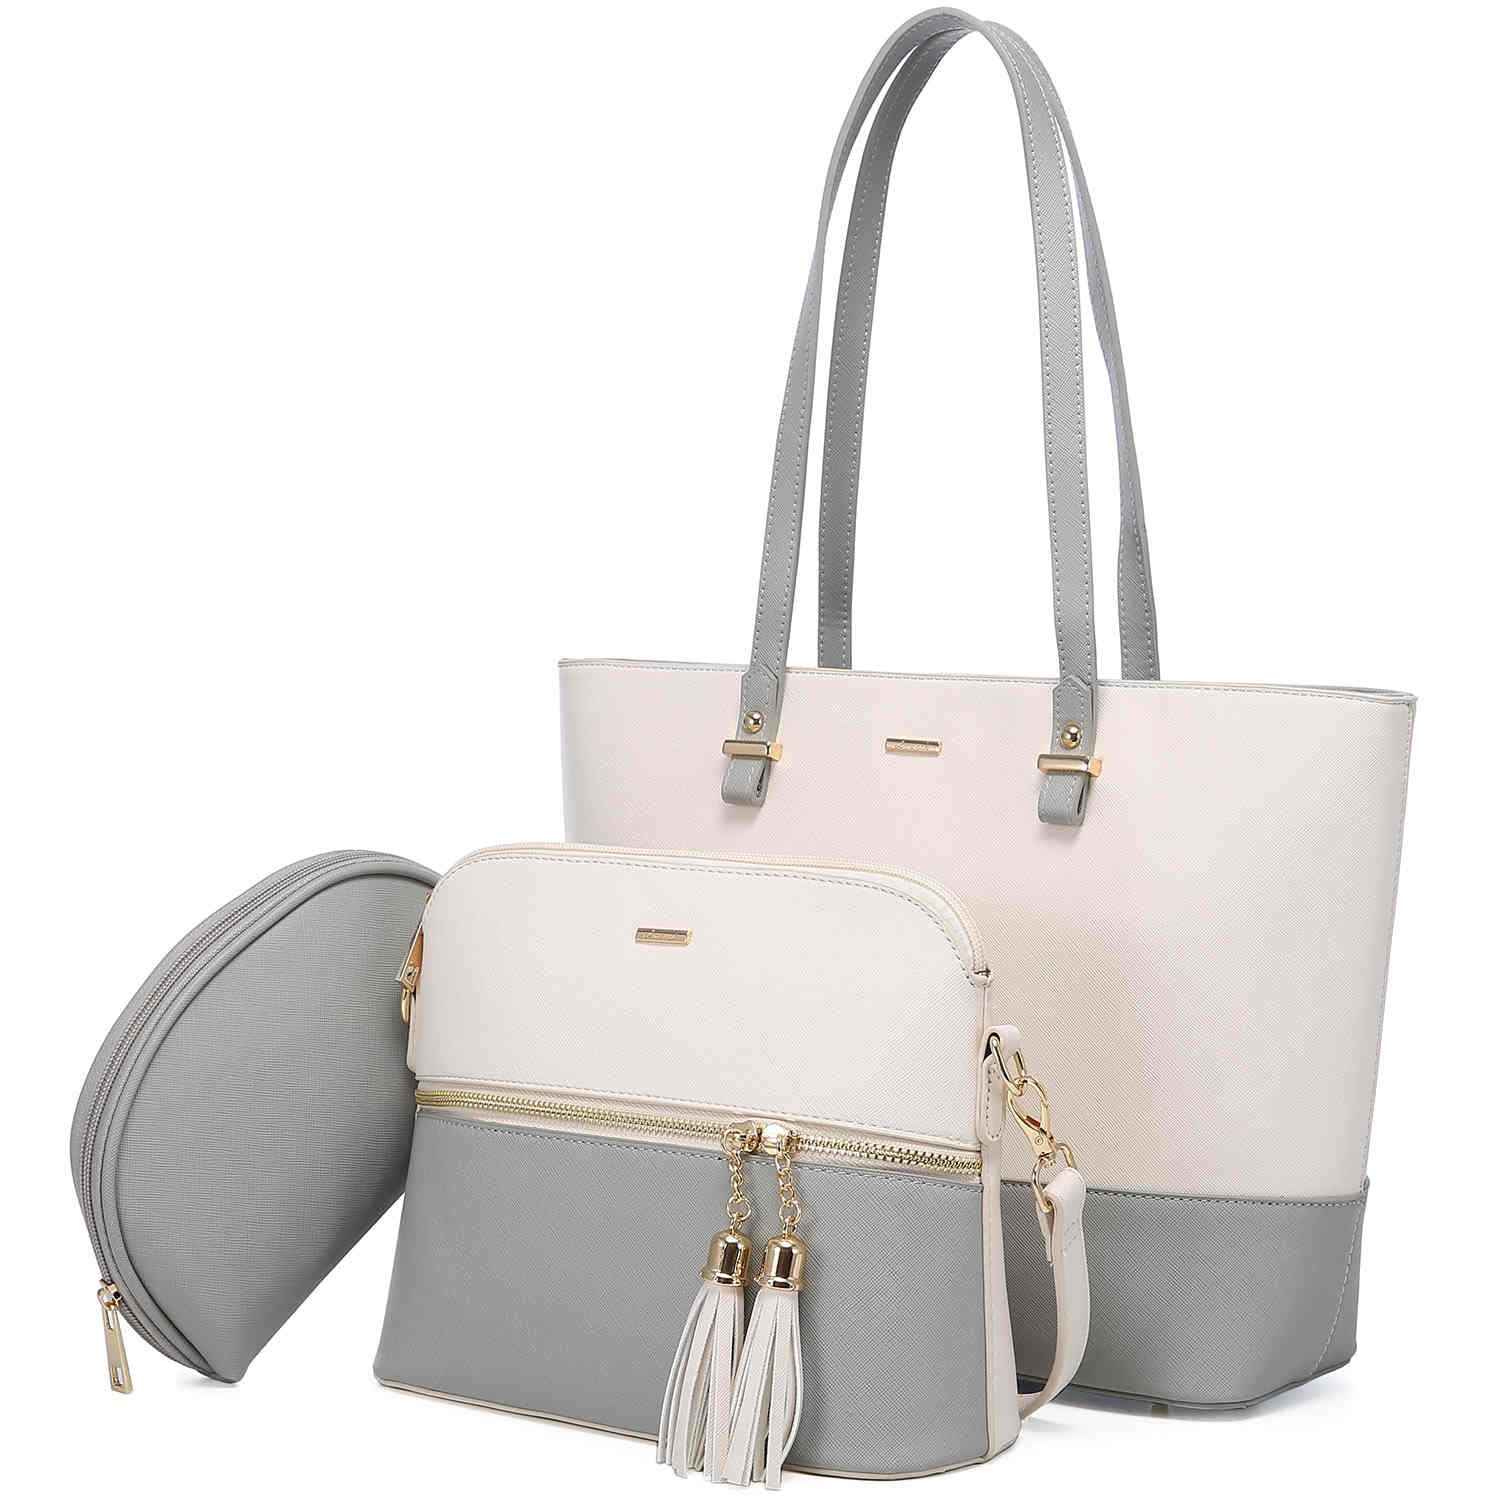 Shoulder bag for women, Tote Satchel, high quality, roomy | LOVEVOOK